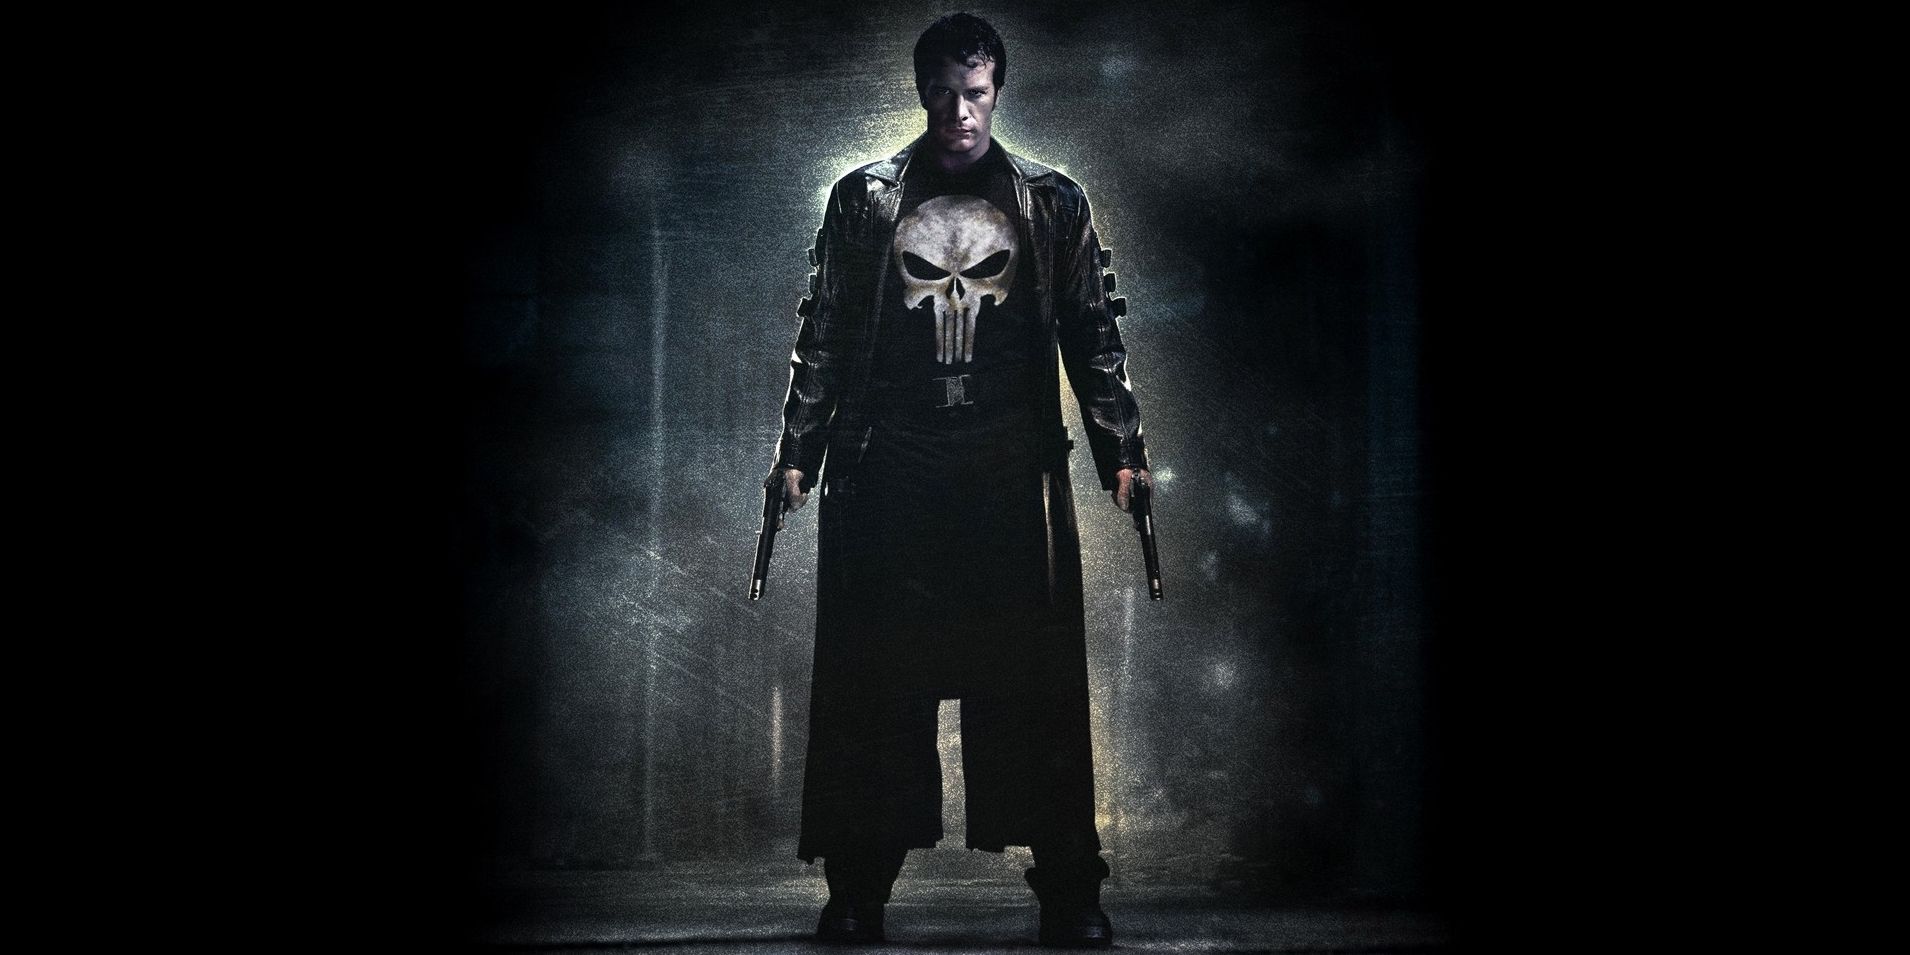 Thomas Jane on The Punisher poster.